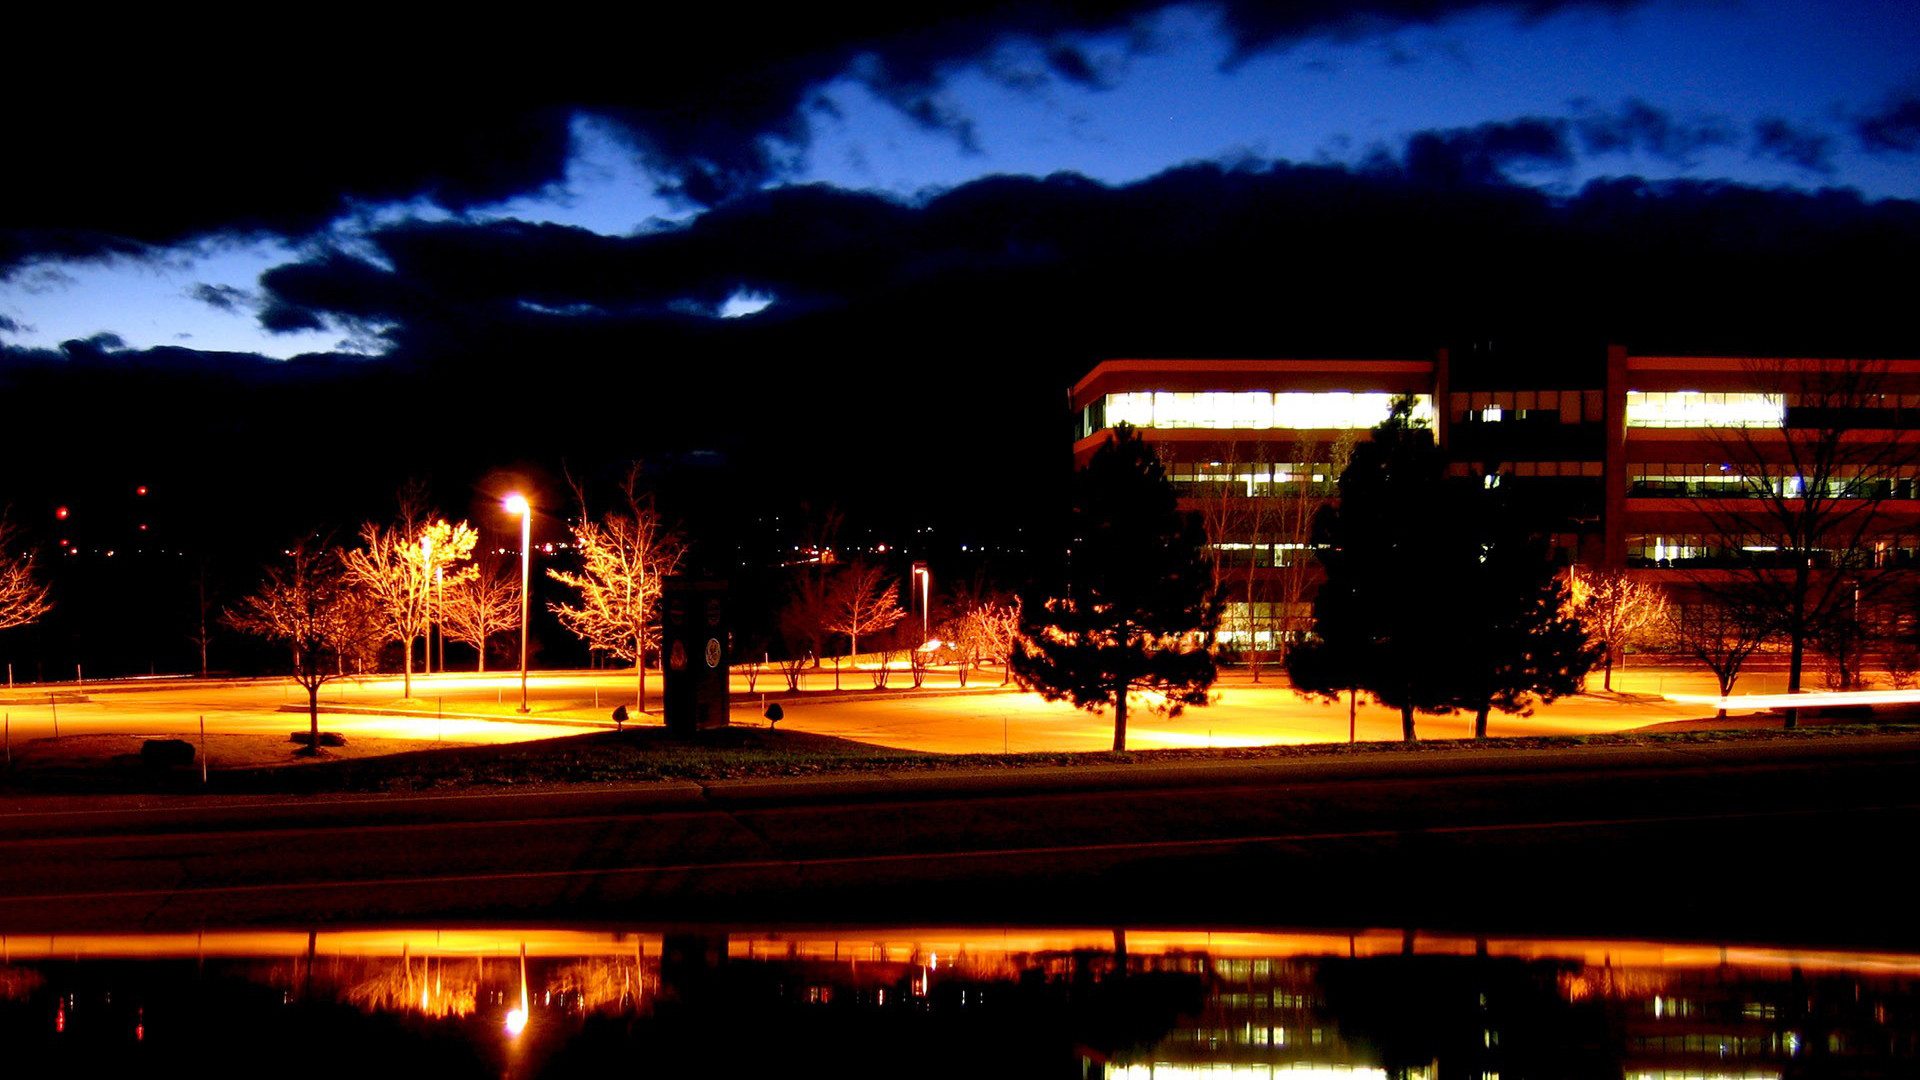 General 1920x1080 night parking lot The university campus street light trees overcast